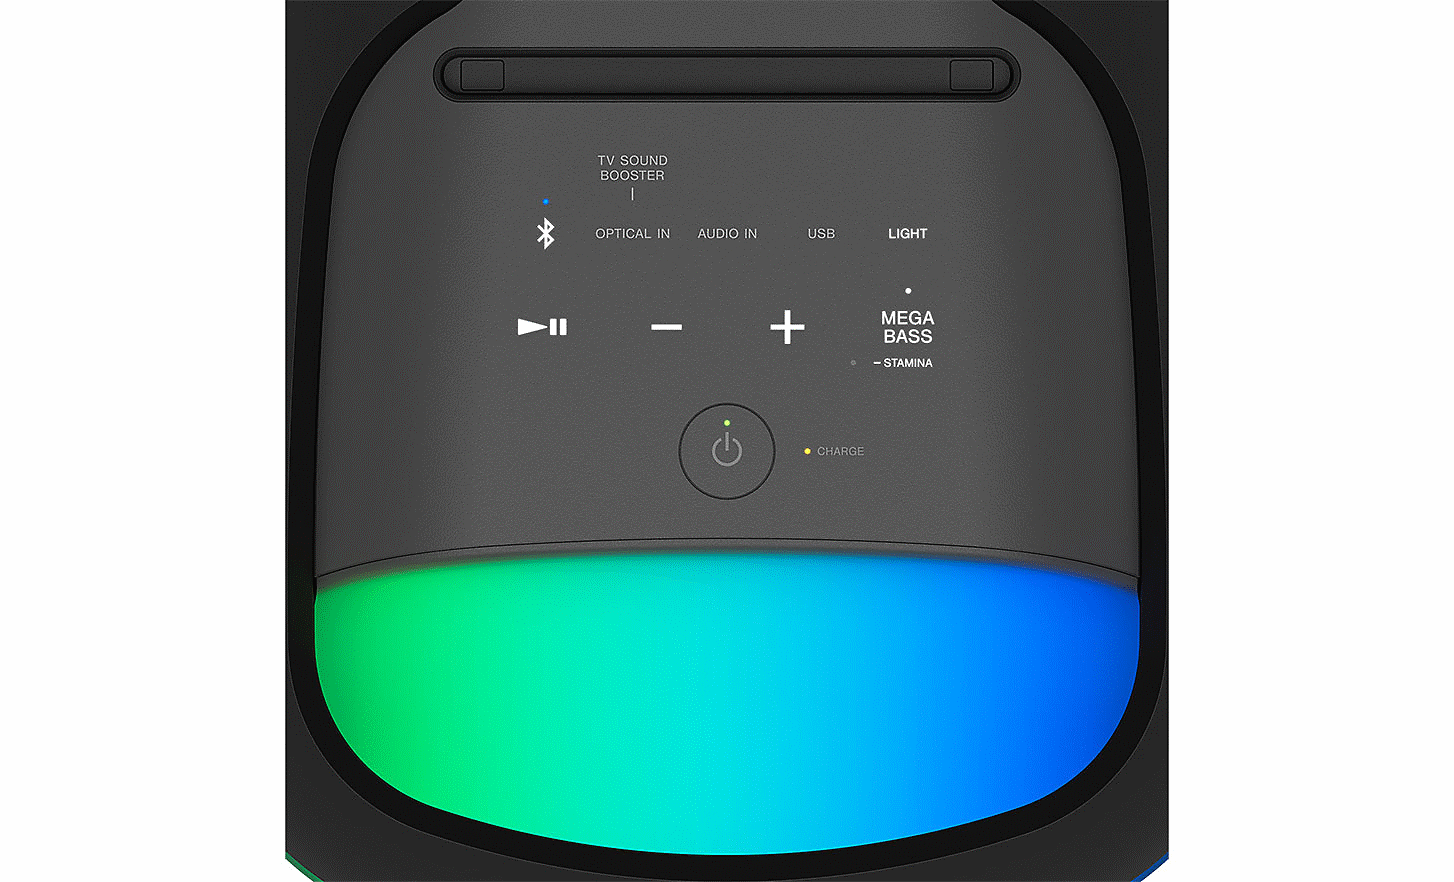 Gambar close up panel kontrol SRS-XV800 dengan tombol bercahaya dan pencahayaan sekitar warna hijau dan biru